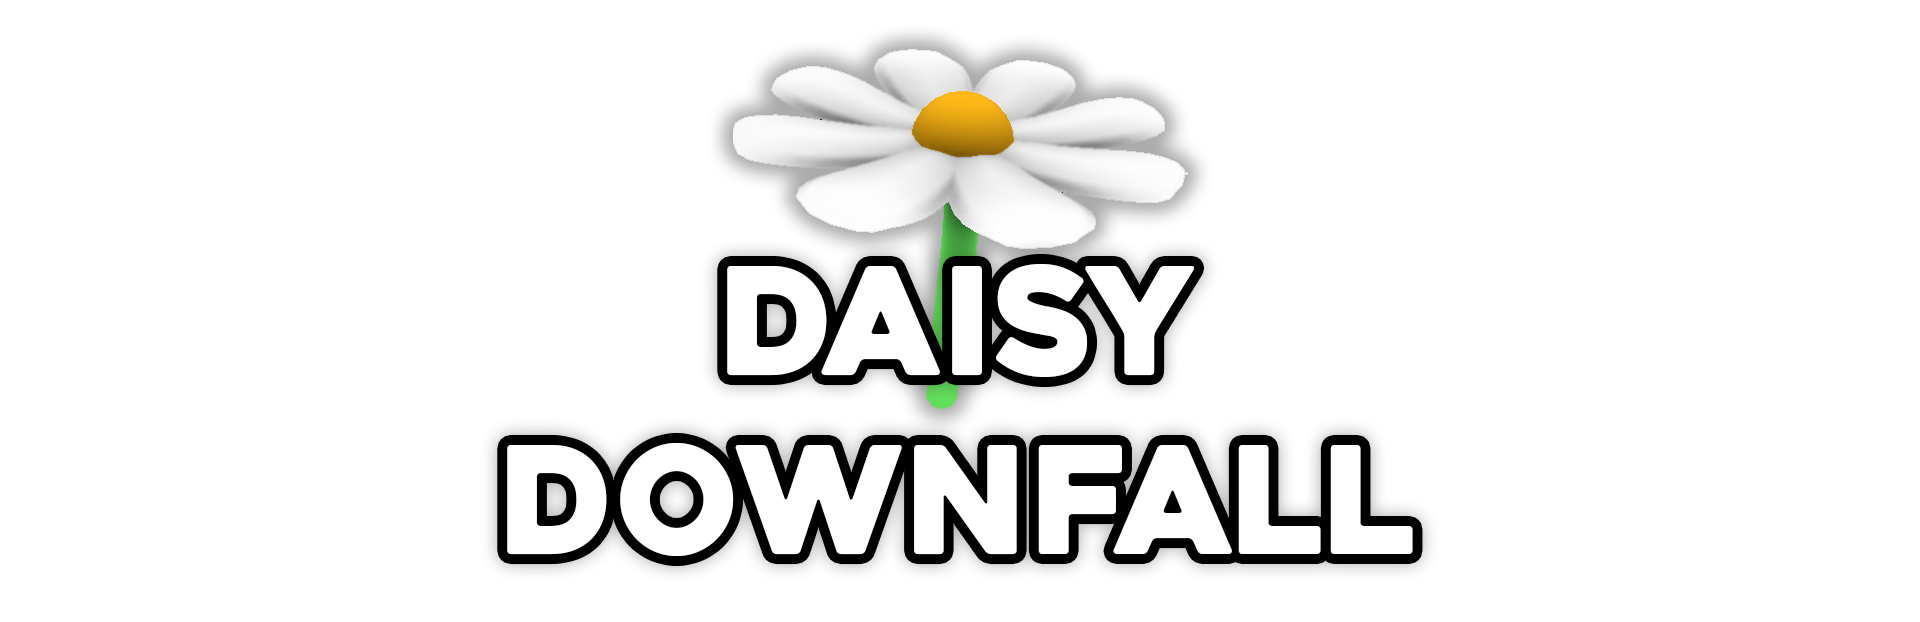 Daisy Downfall